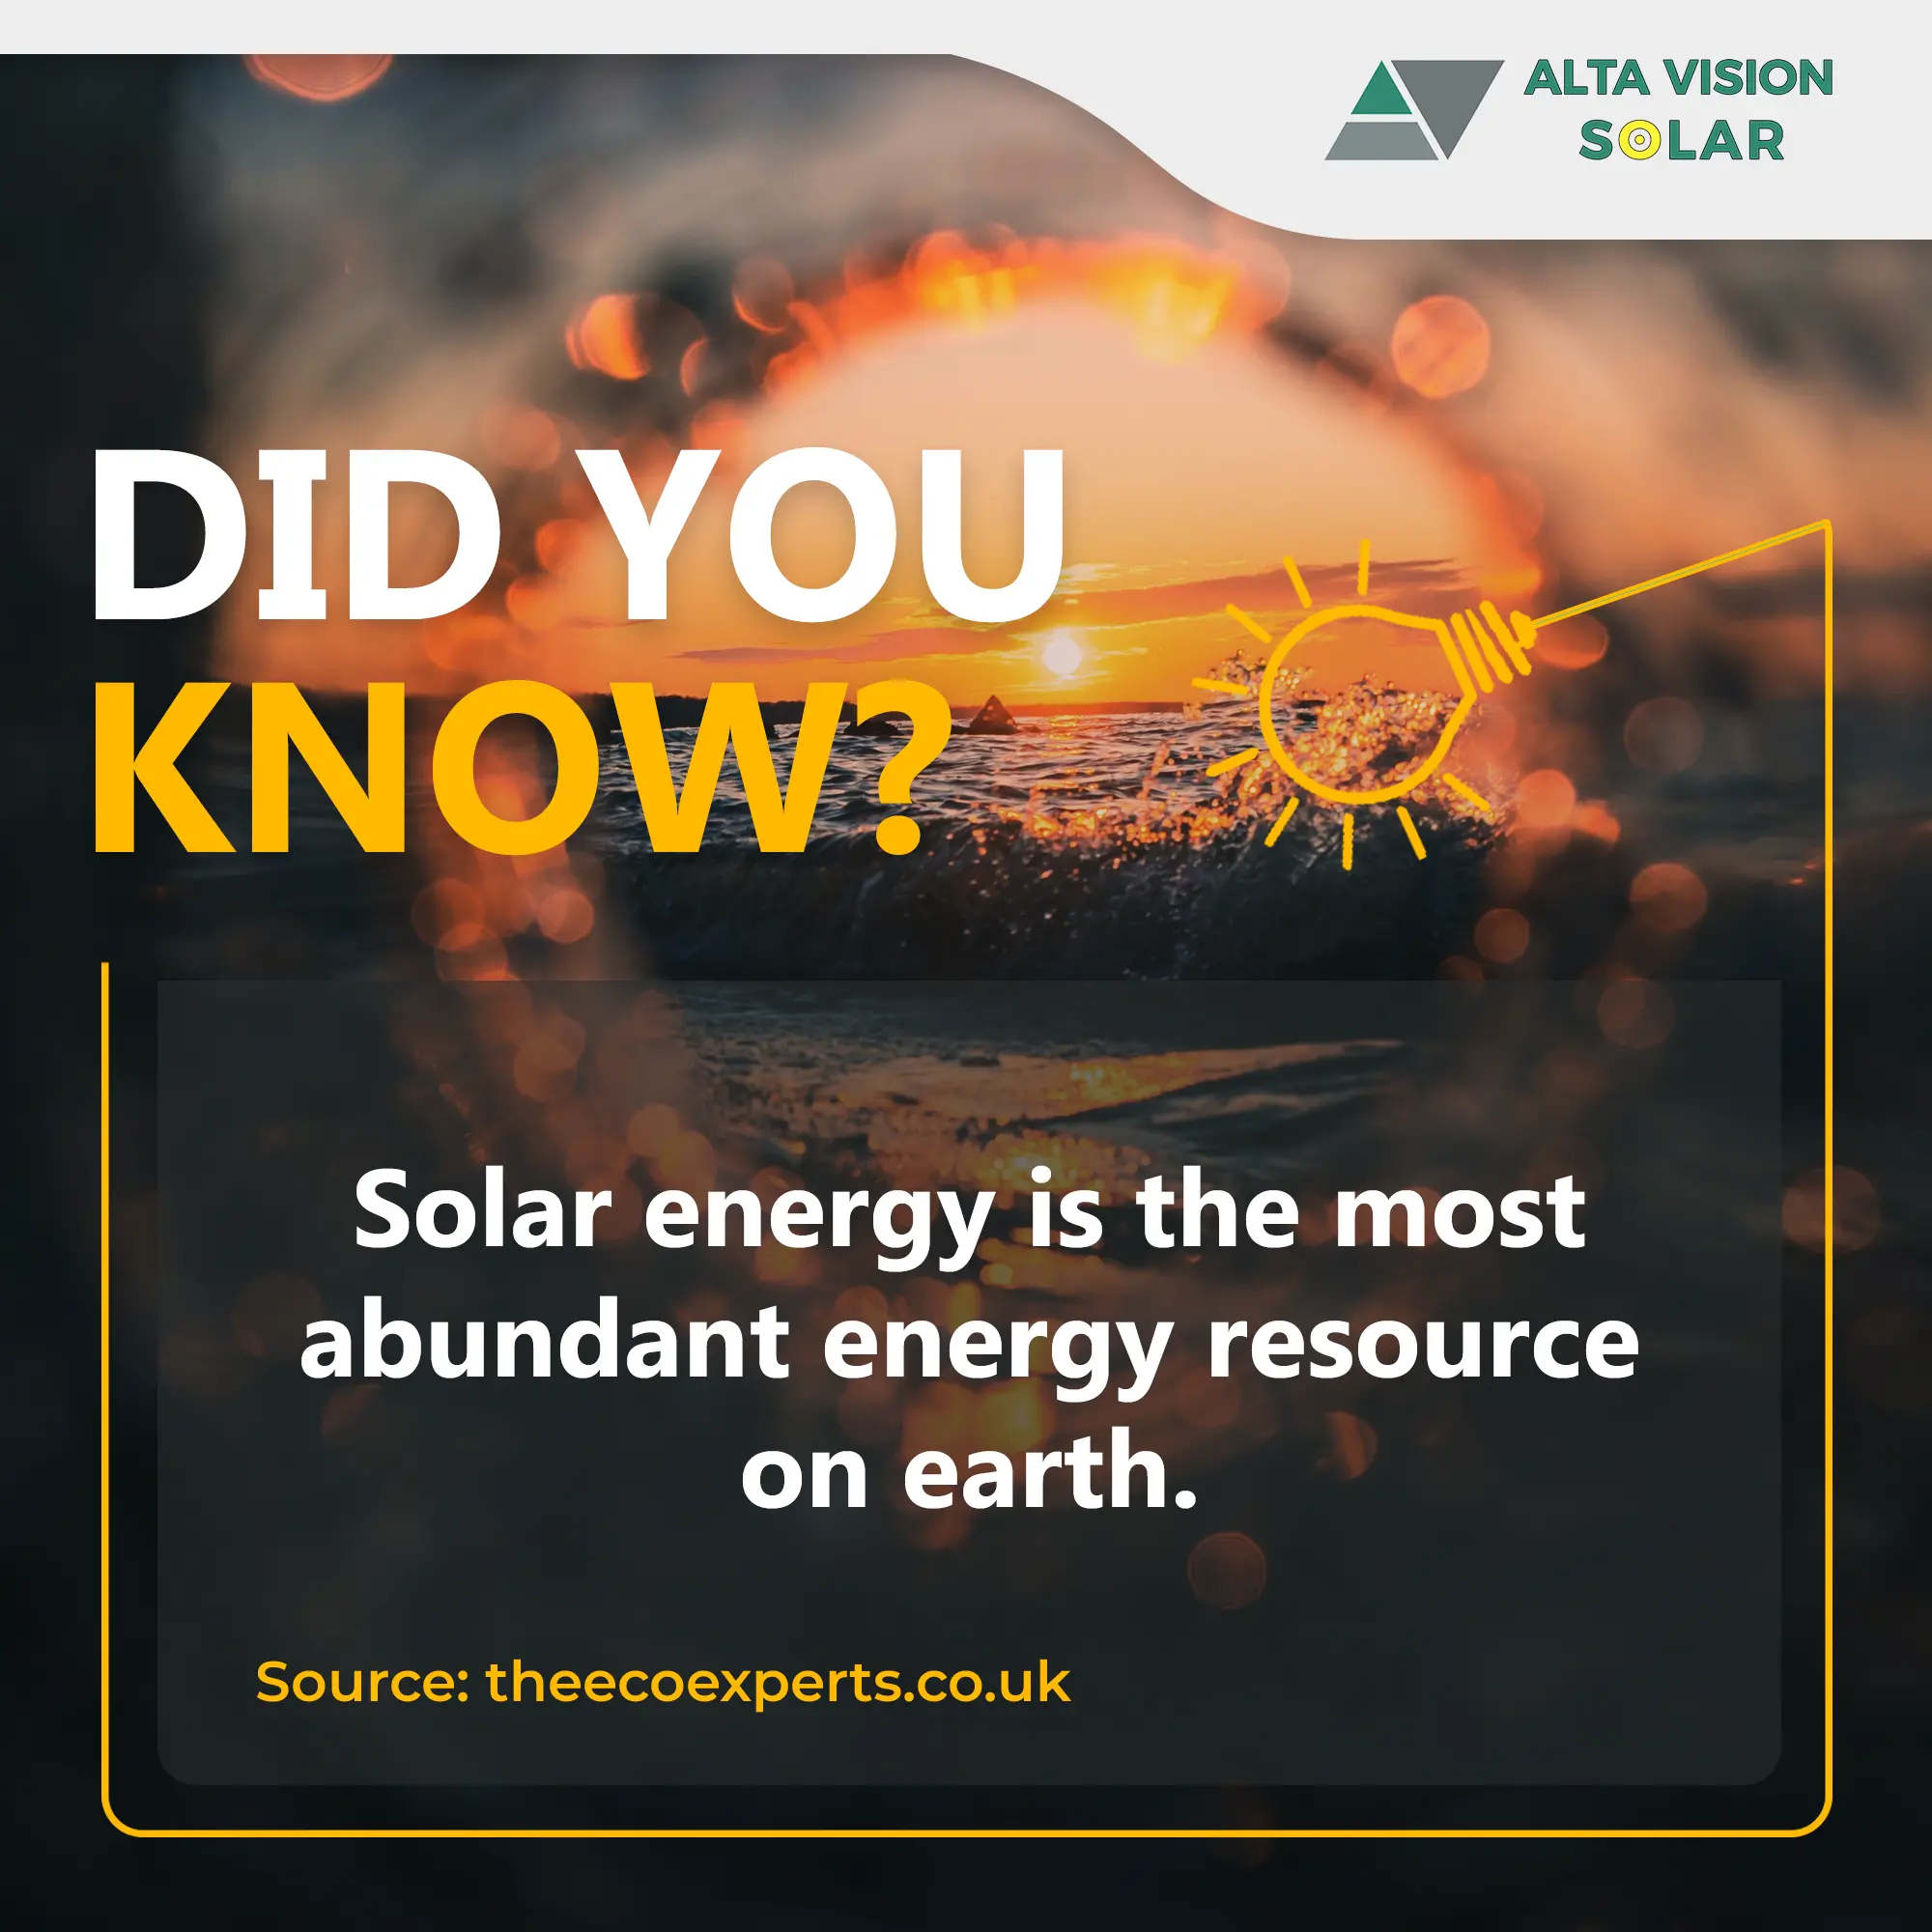 Solar energy is the most abundant energy resource on earth”